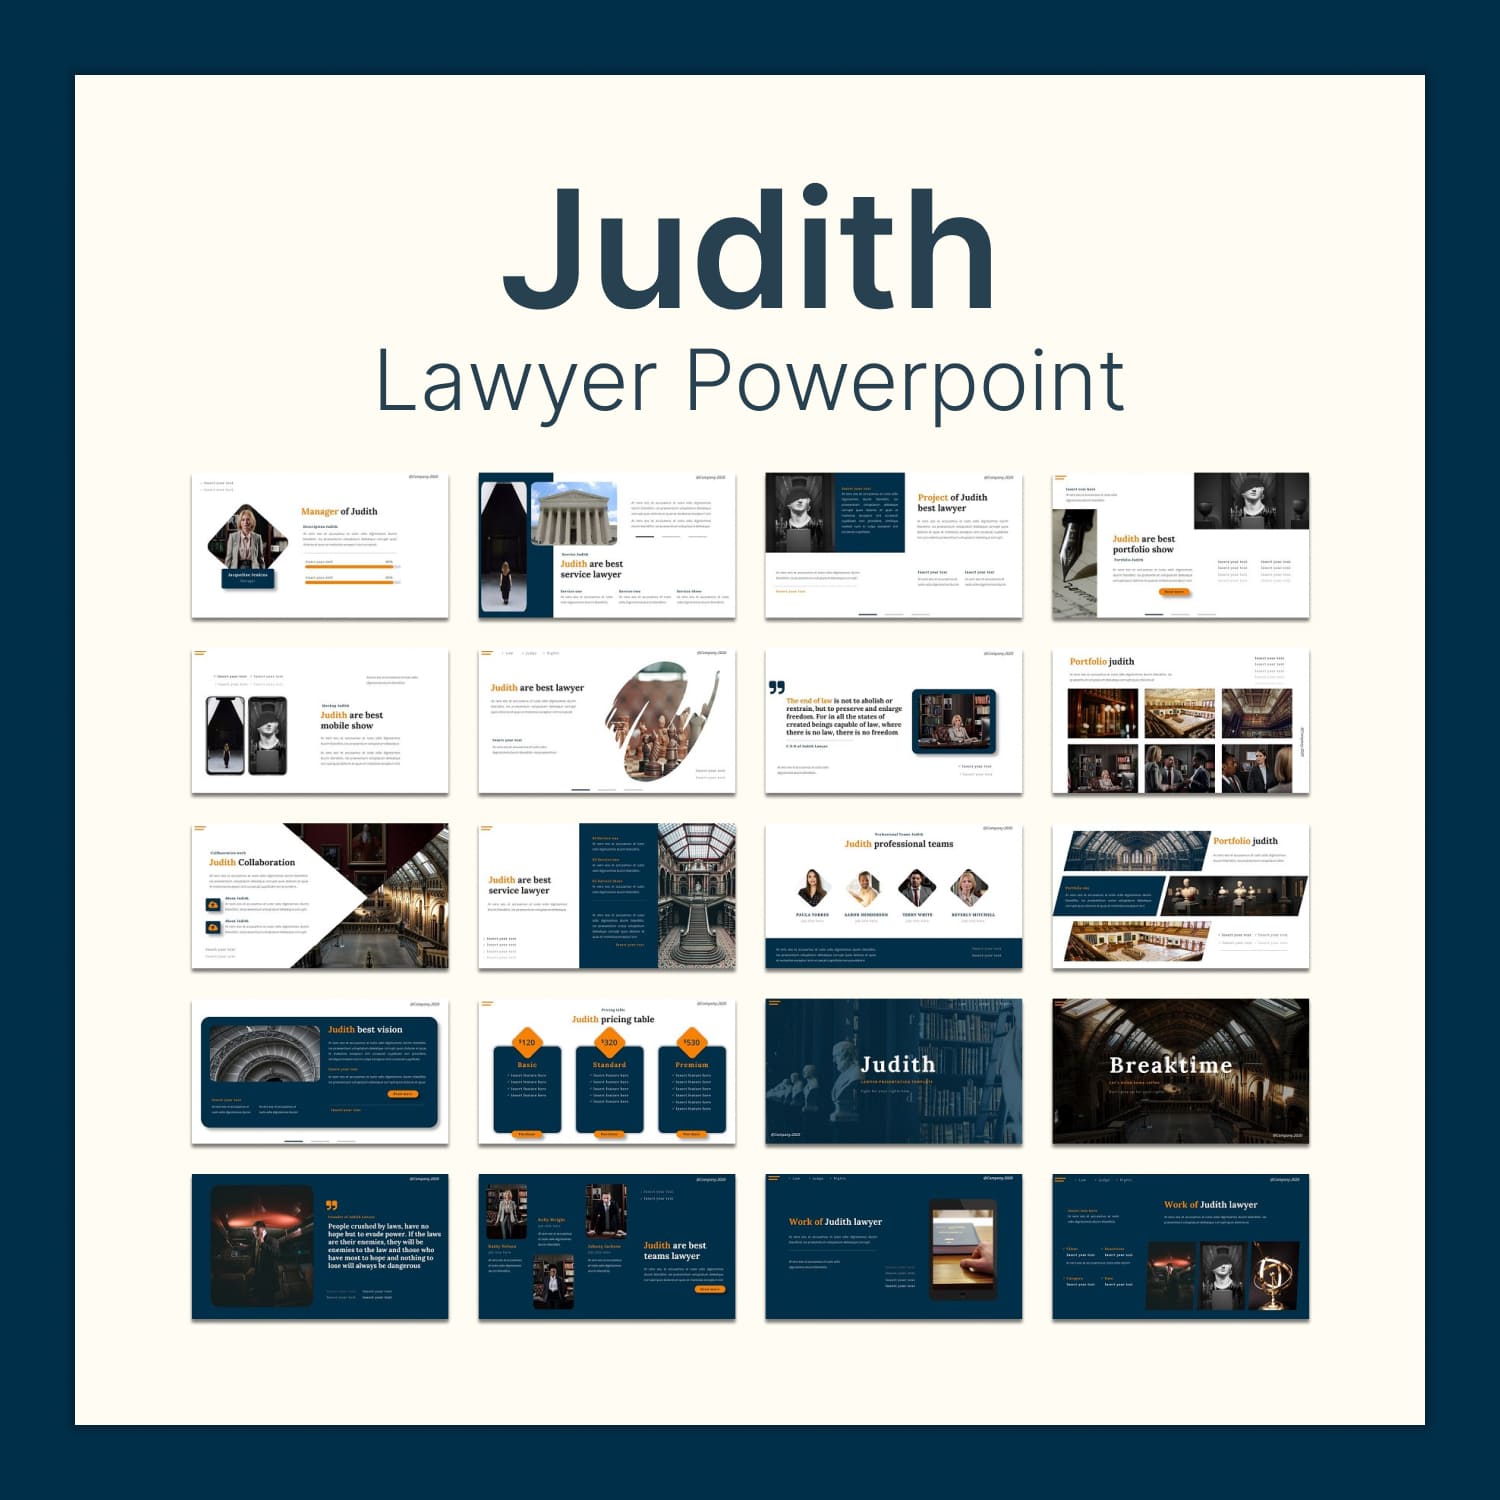 Judith - Lawyer Powerpoint.